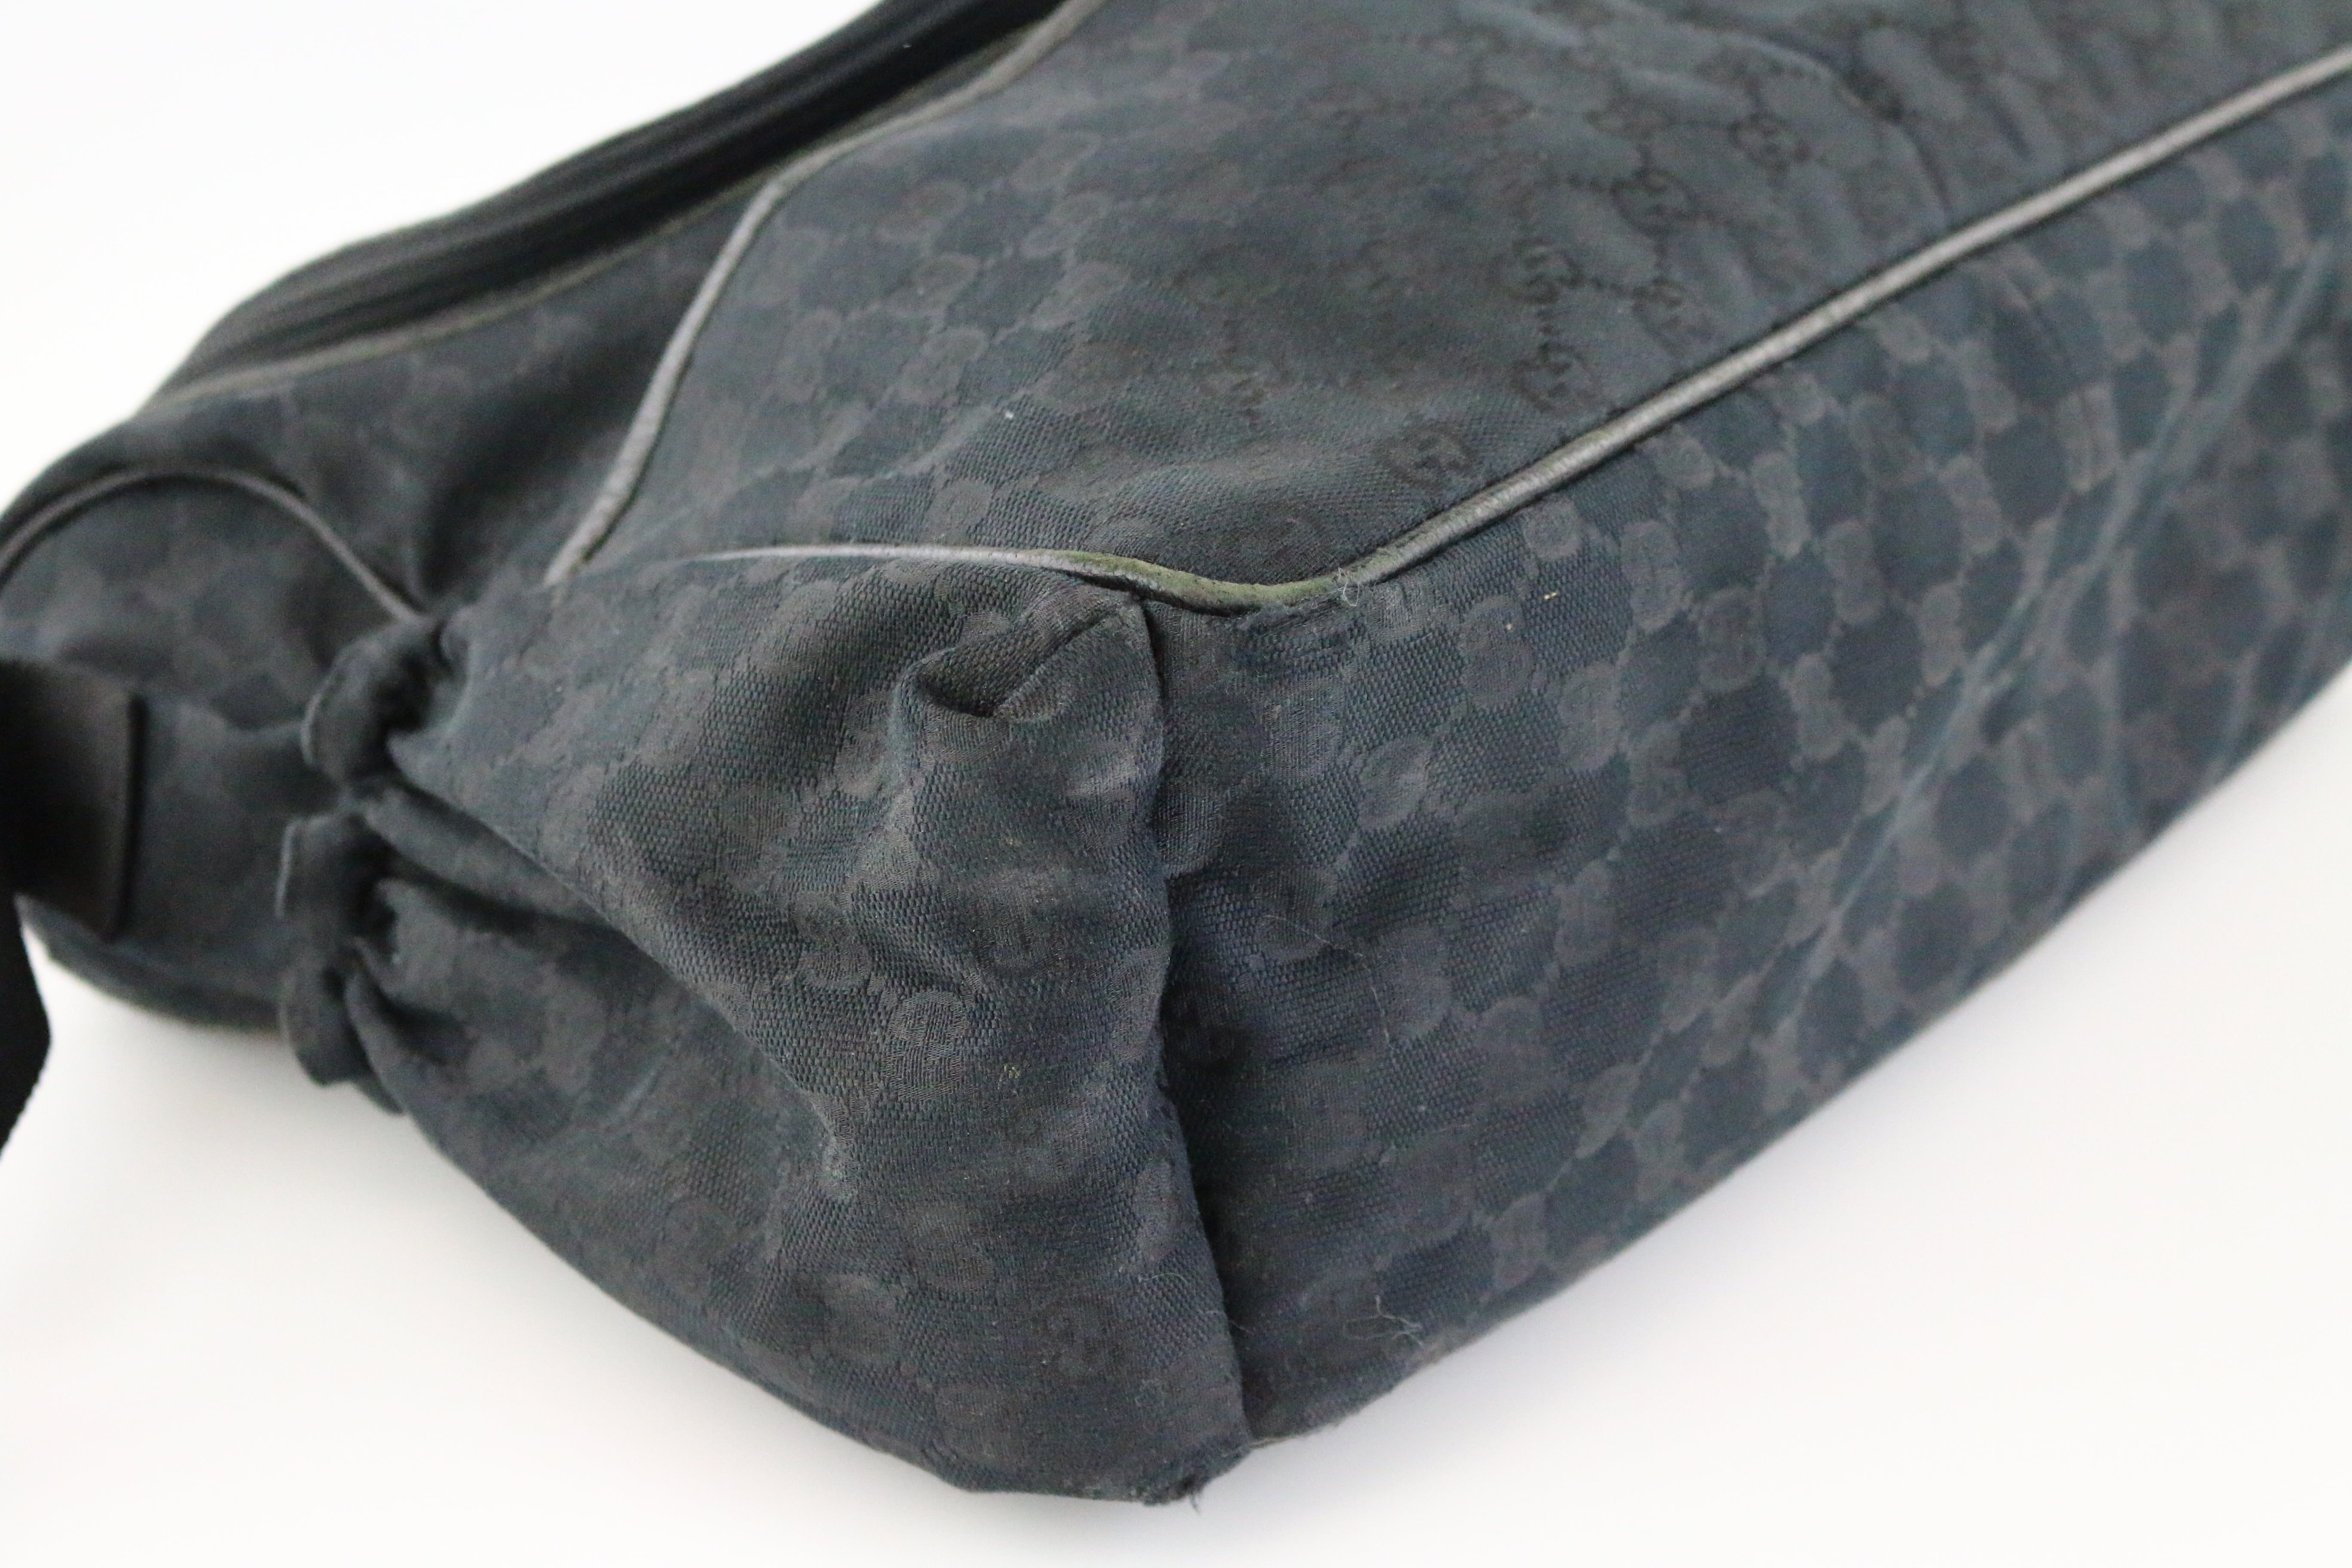 Gucci Beige/Ebony GG Canvas Diaper Bag Gucci